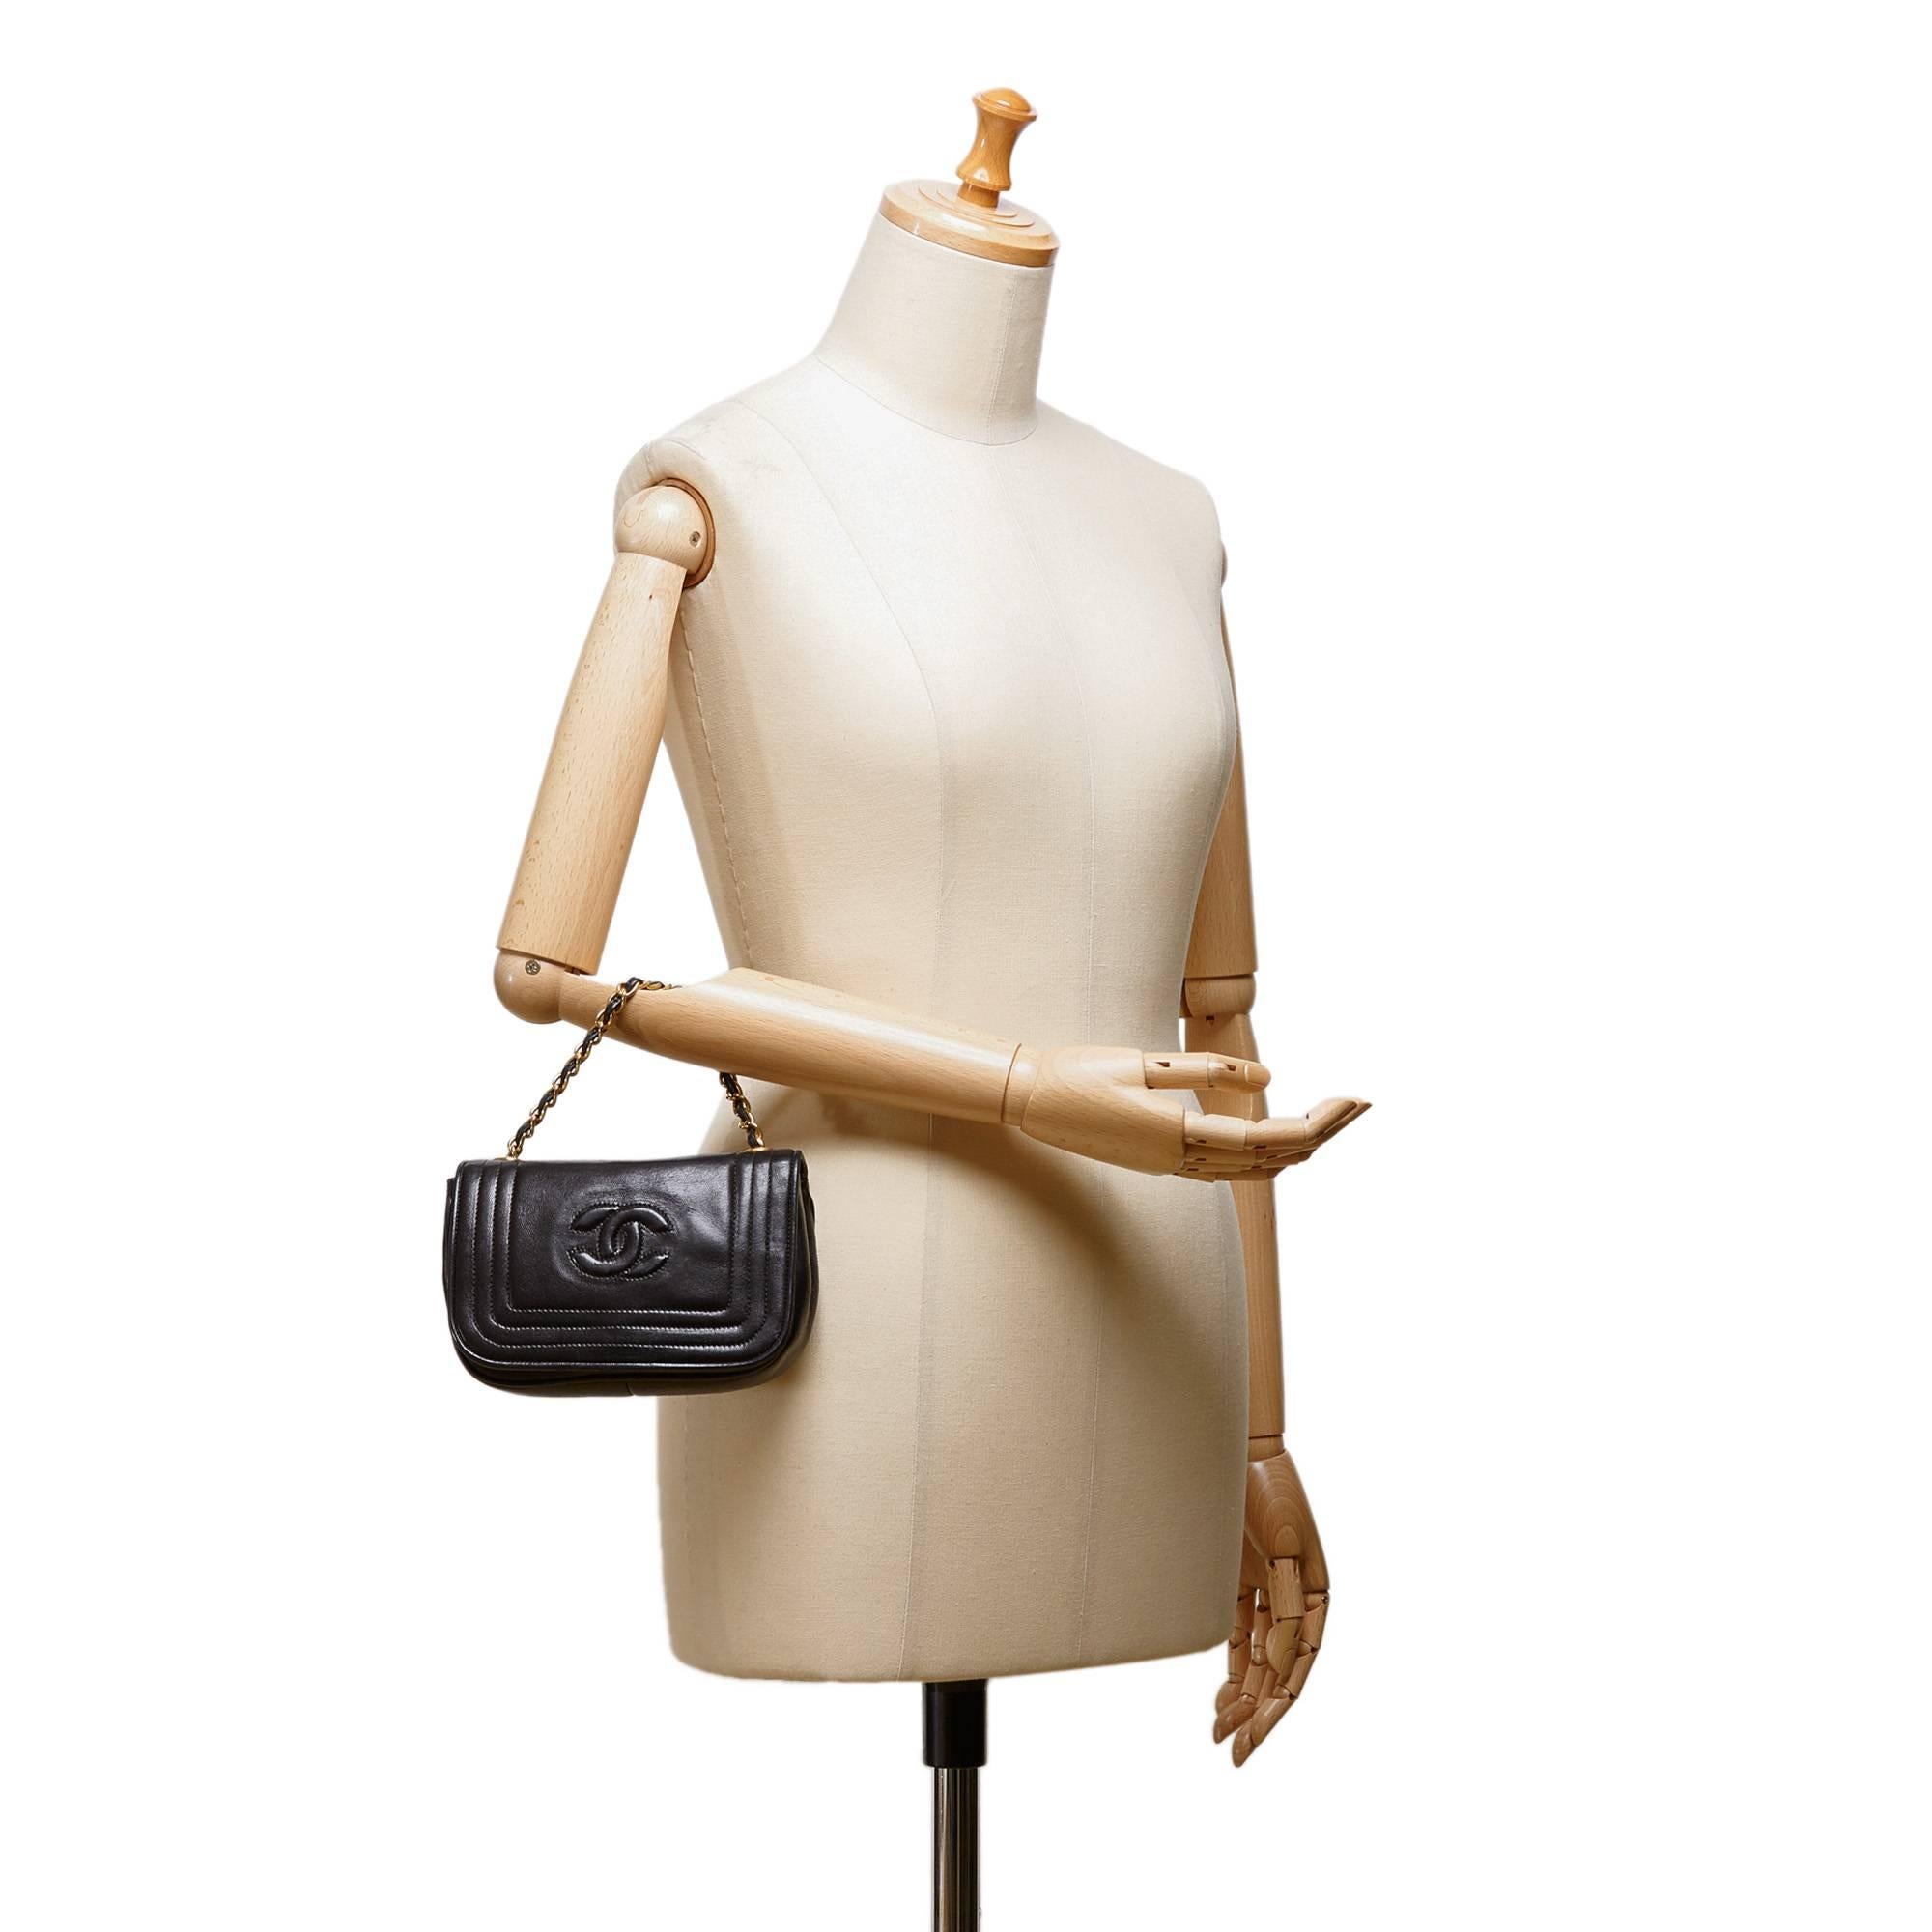 - Vintage 90s Chanel black lambskin straight stitch details gold chain bag. 

- A 